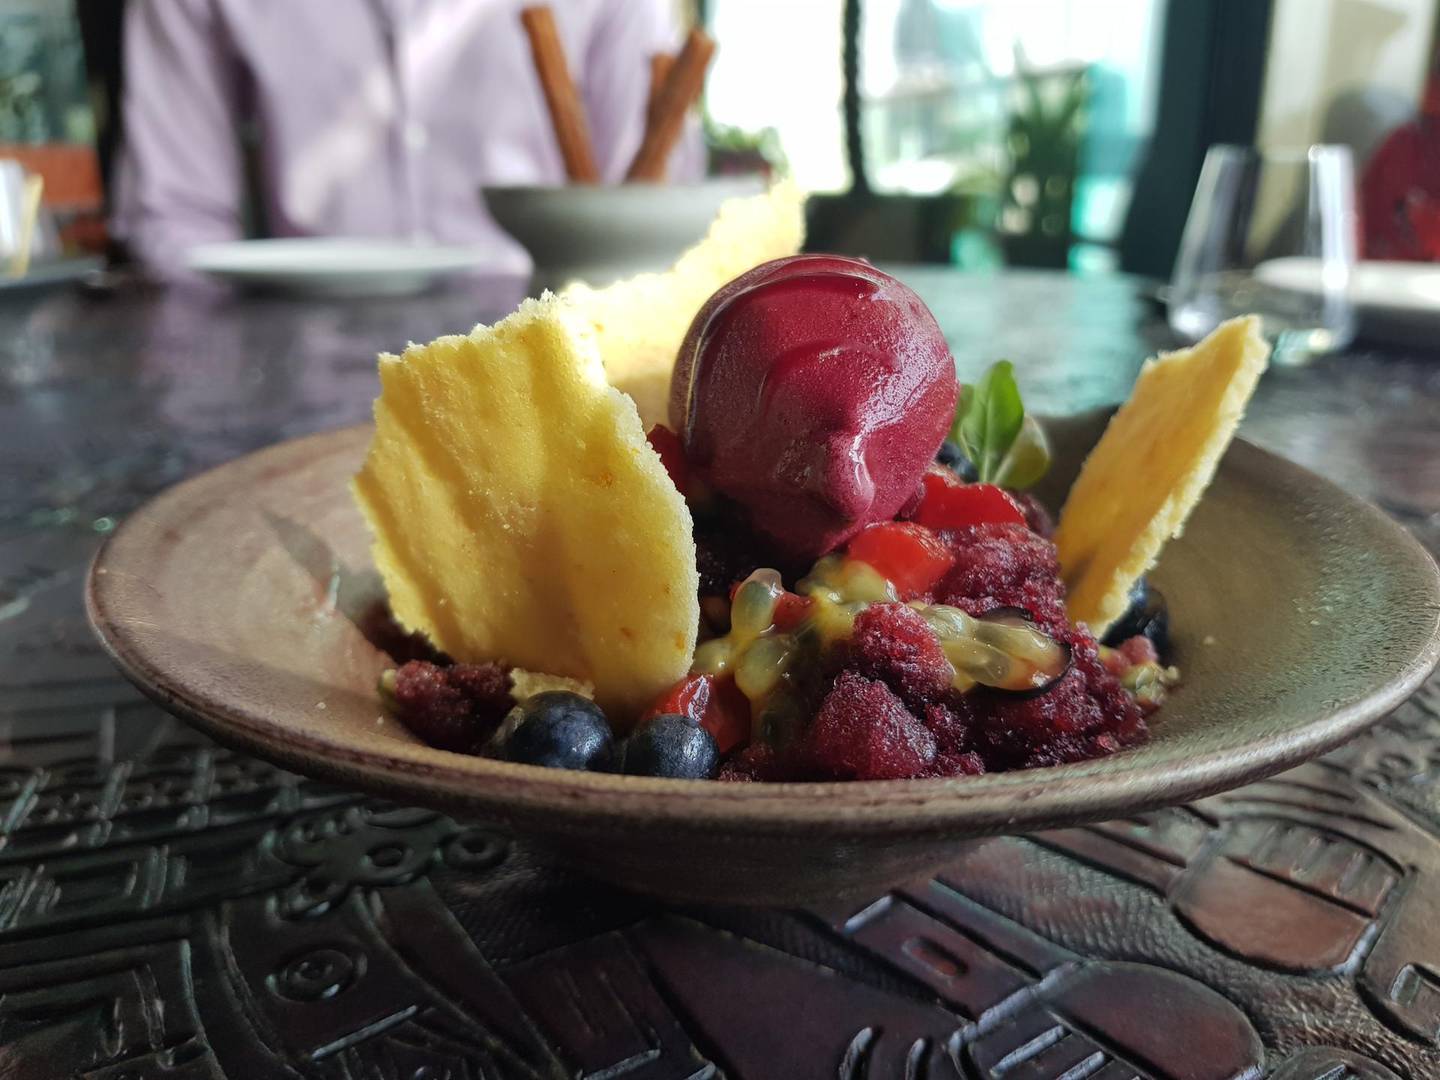 Granita-style dessert at Coya. Photo: Tahira Yaqoob